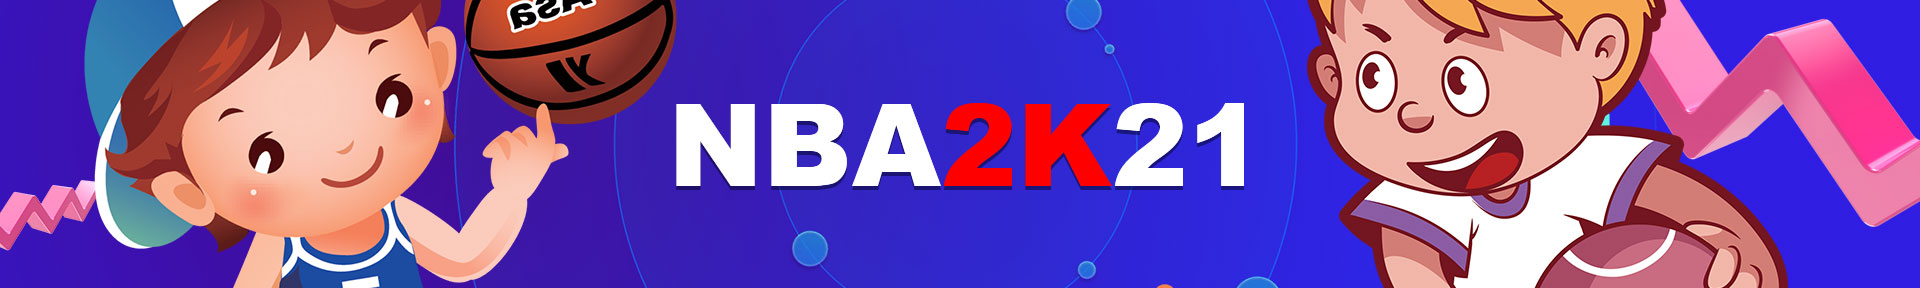 NBA 2K21 VC Boosting